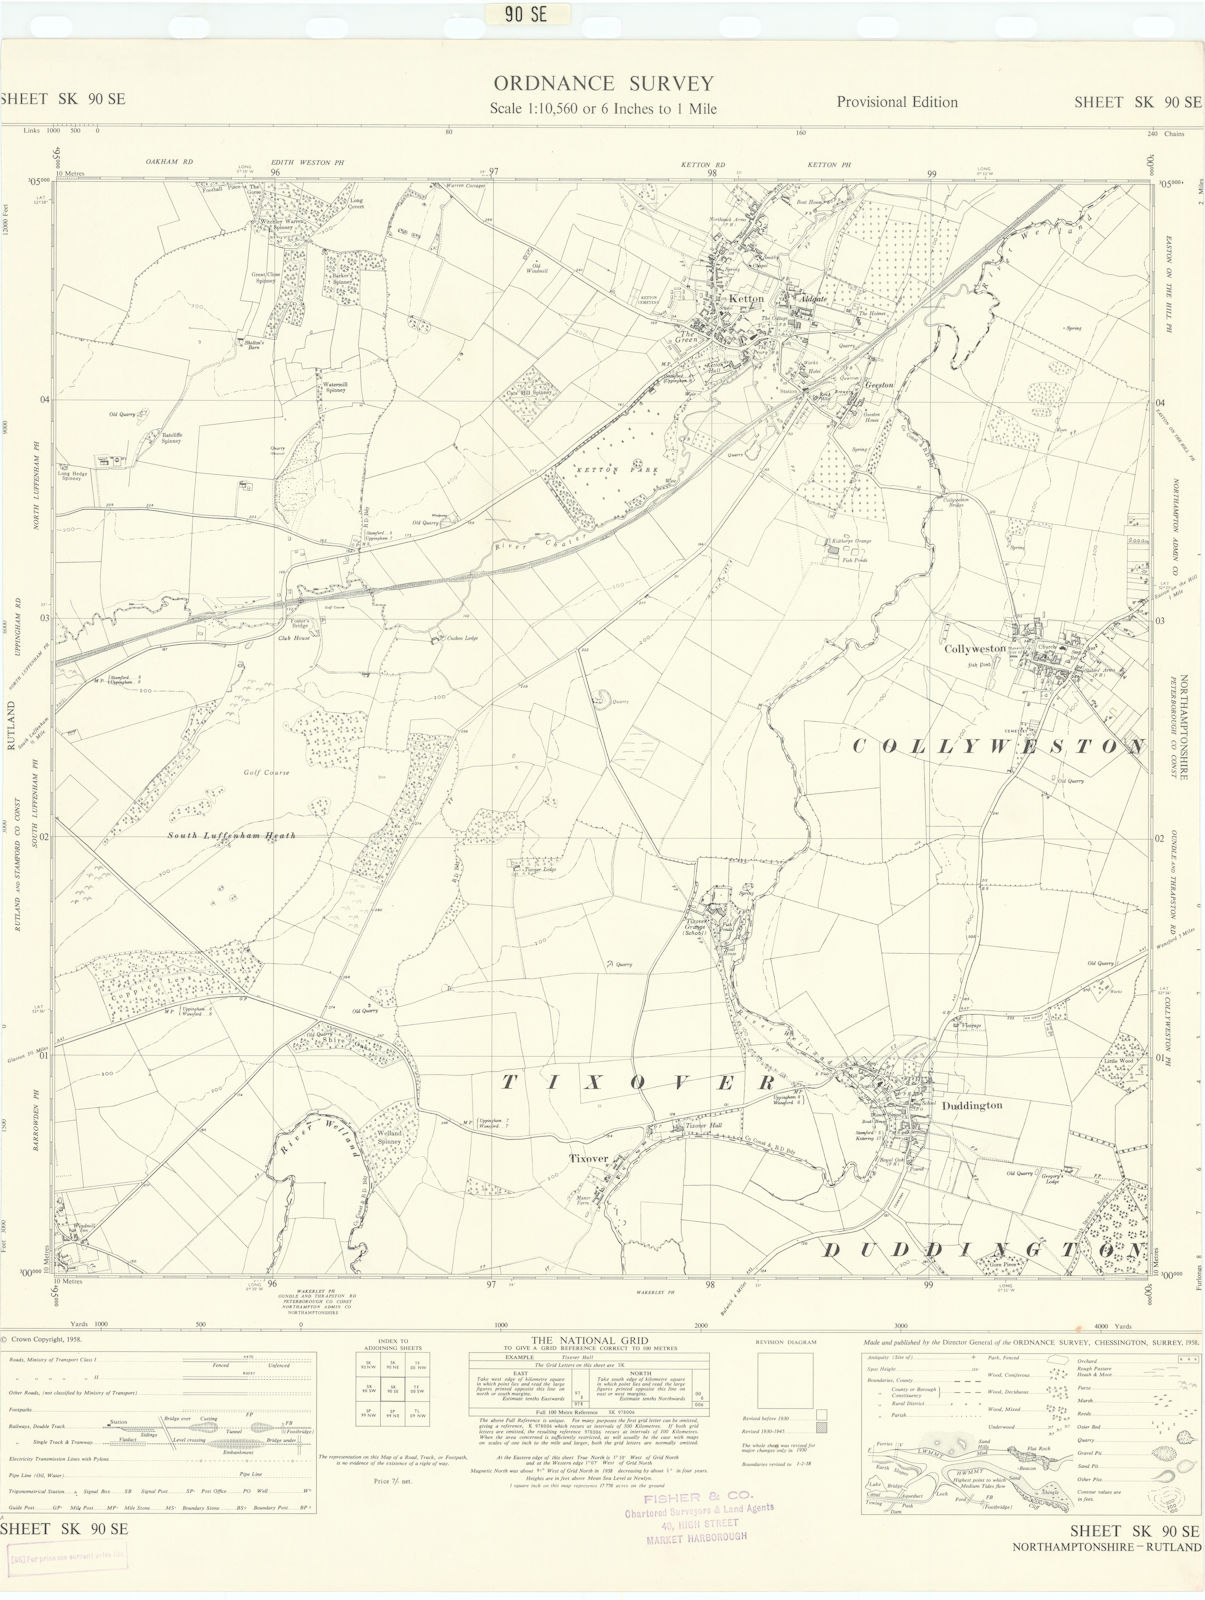 Ordnance Survey SK90SE Northants Tixover Collyweston Duddington Ketton 1958 map